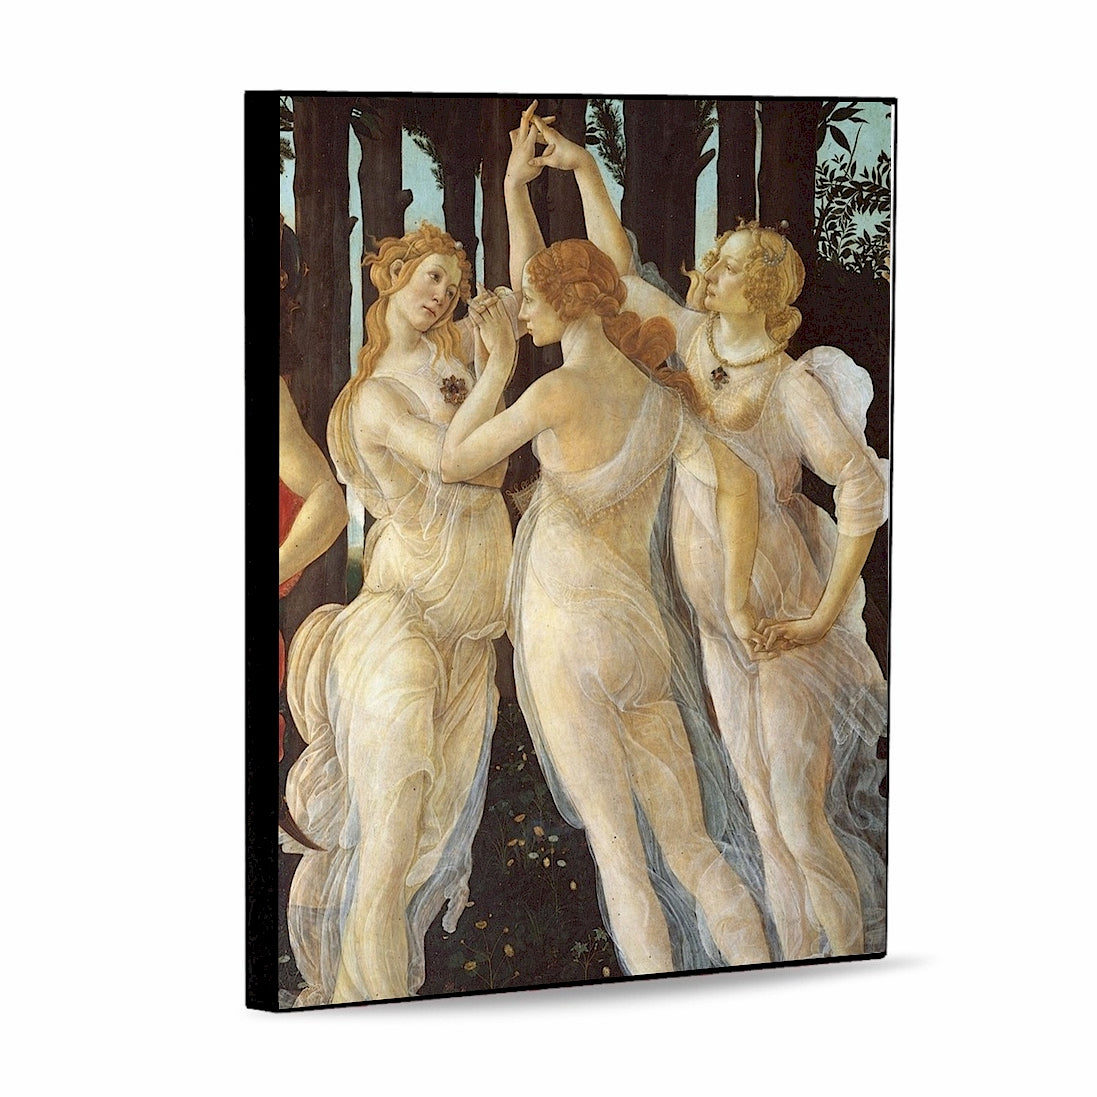 AFFRESCO: Panel Tile - Opera "Primavera" detail by Raphael (Raffaello) (8x10)